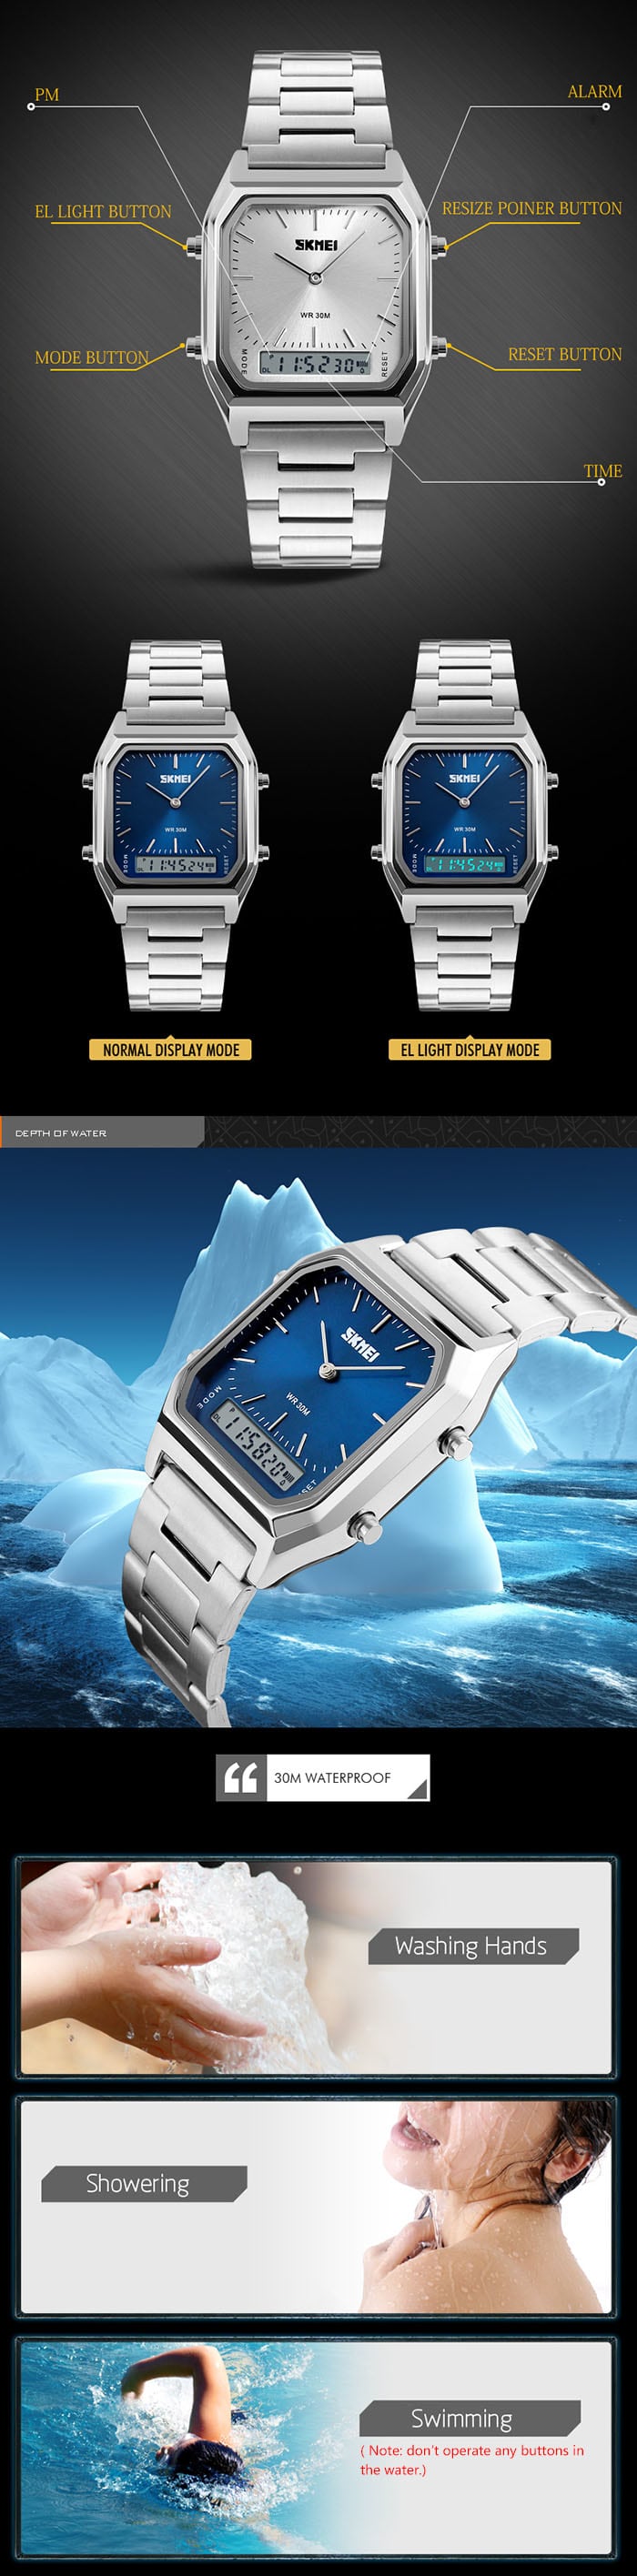 SKMEI 1220 Dual Time Display Fashion Unisex Watch with EL Backlight- Black